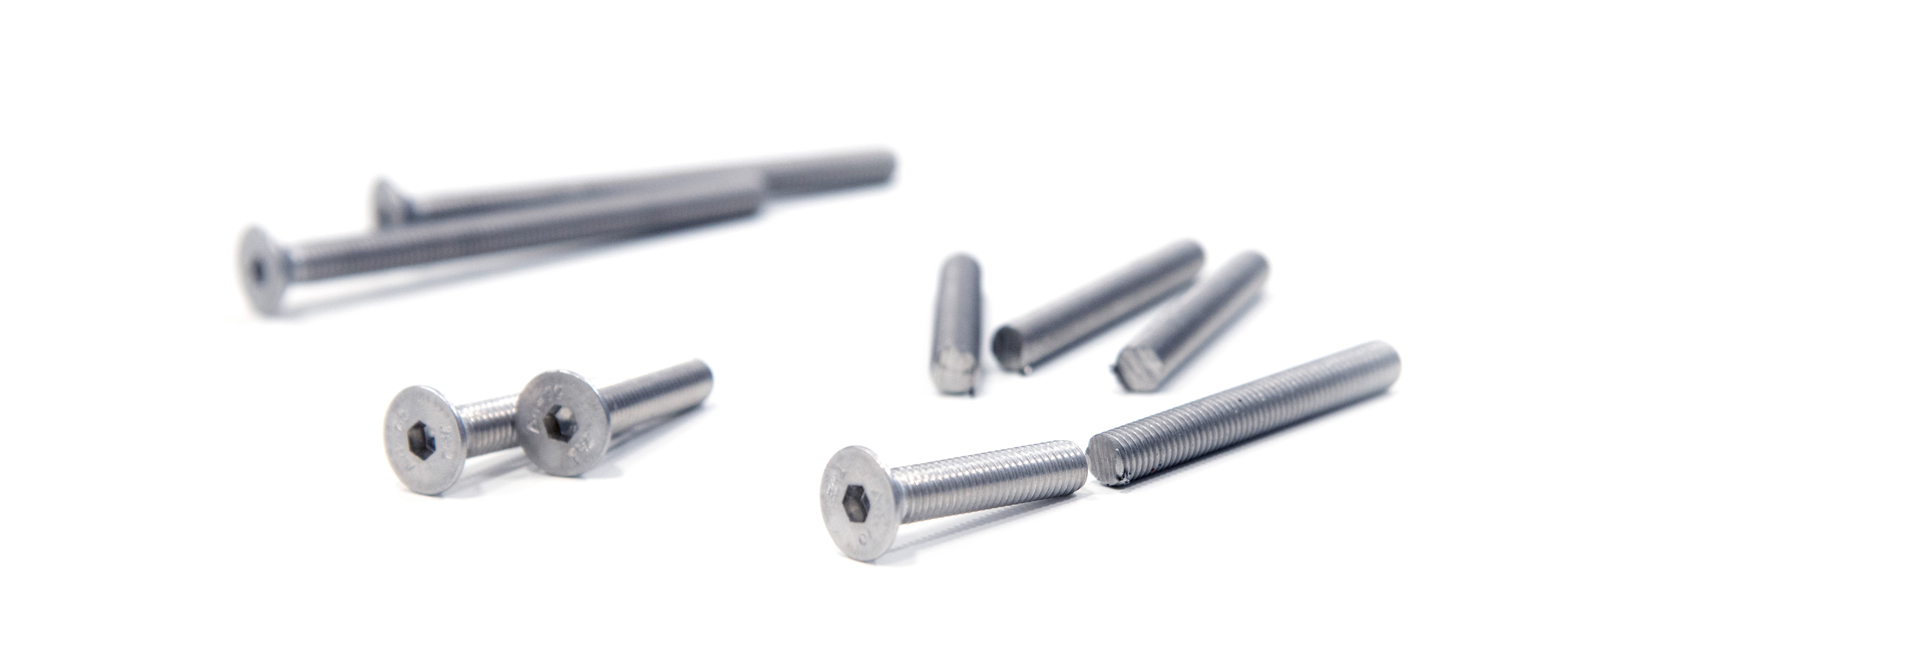 Customization by mechanical machining of screws